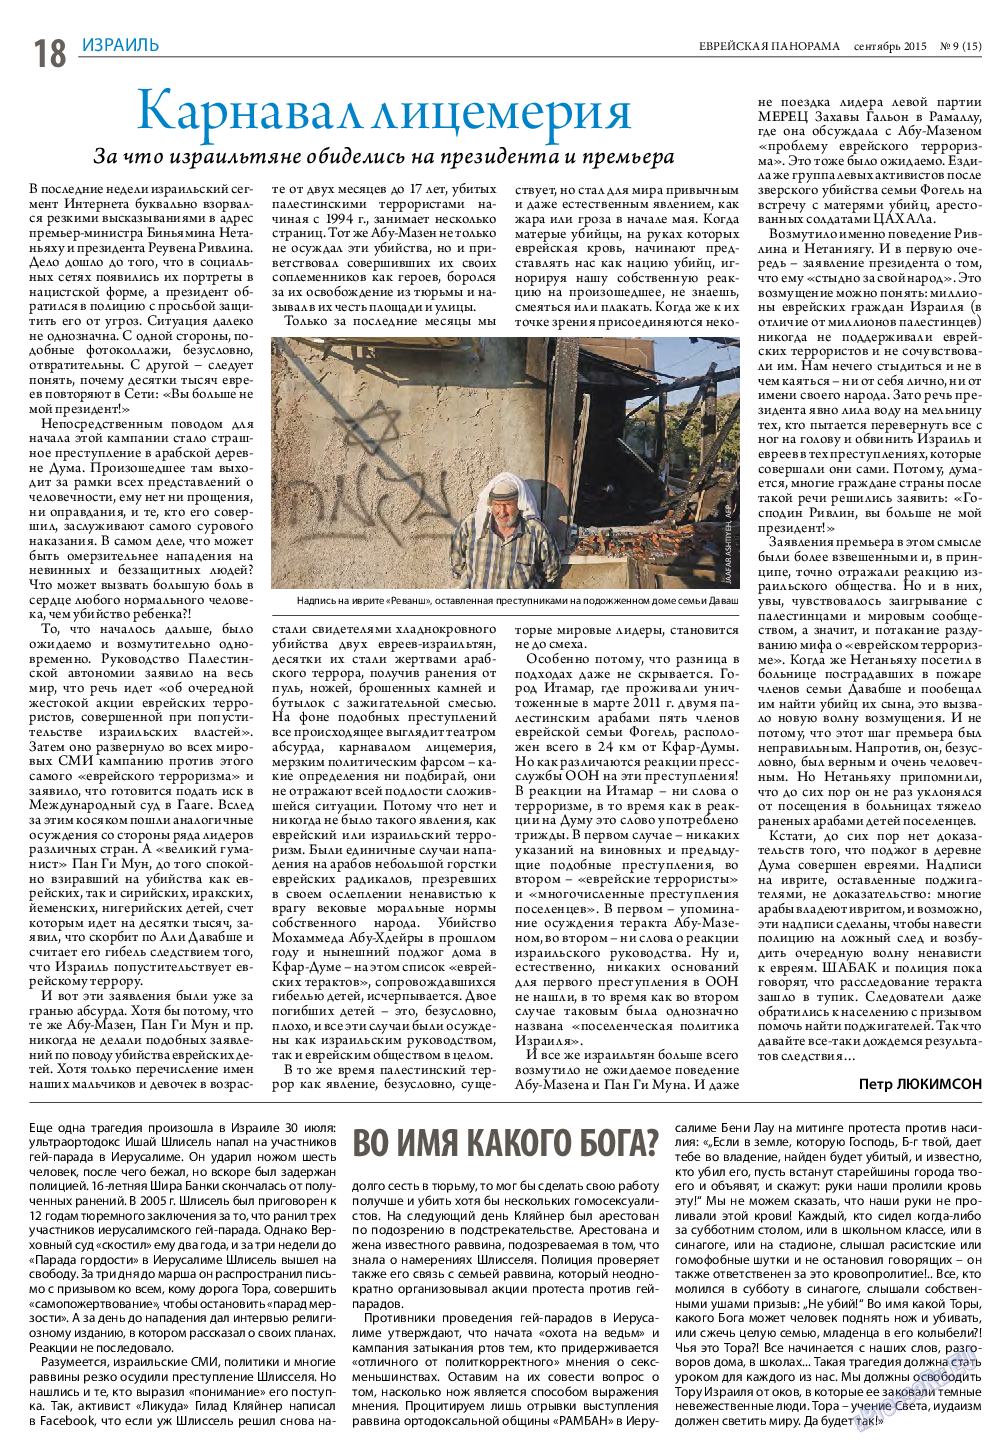 Еврейская панорама, газета. 2015 №9 стр.18